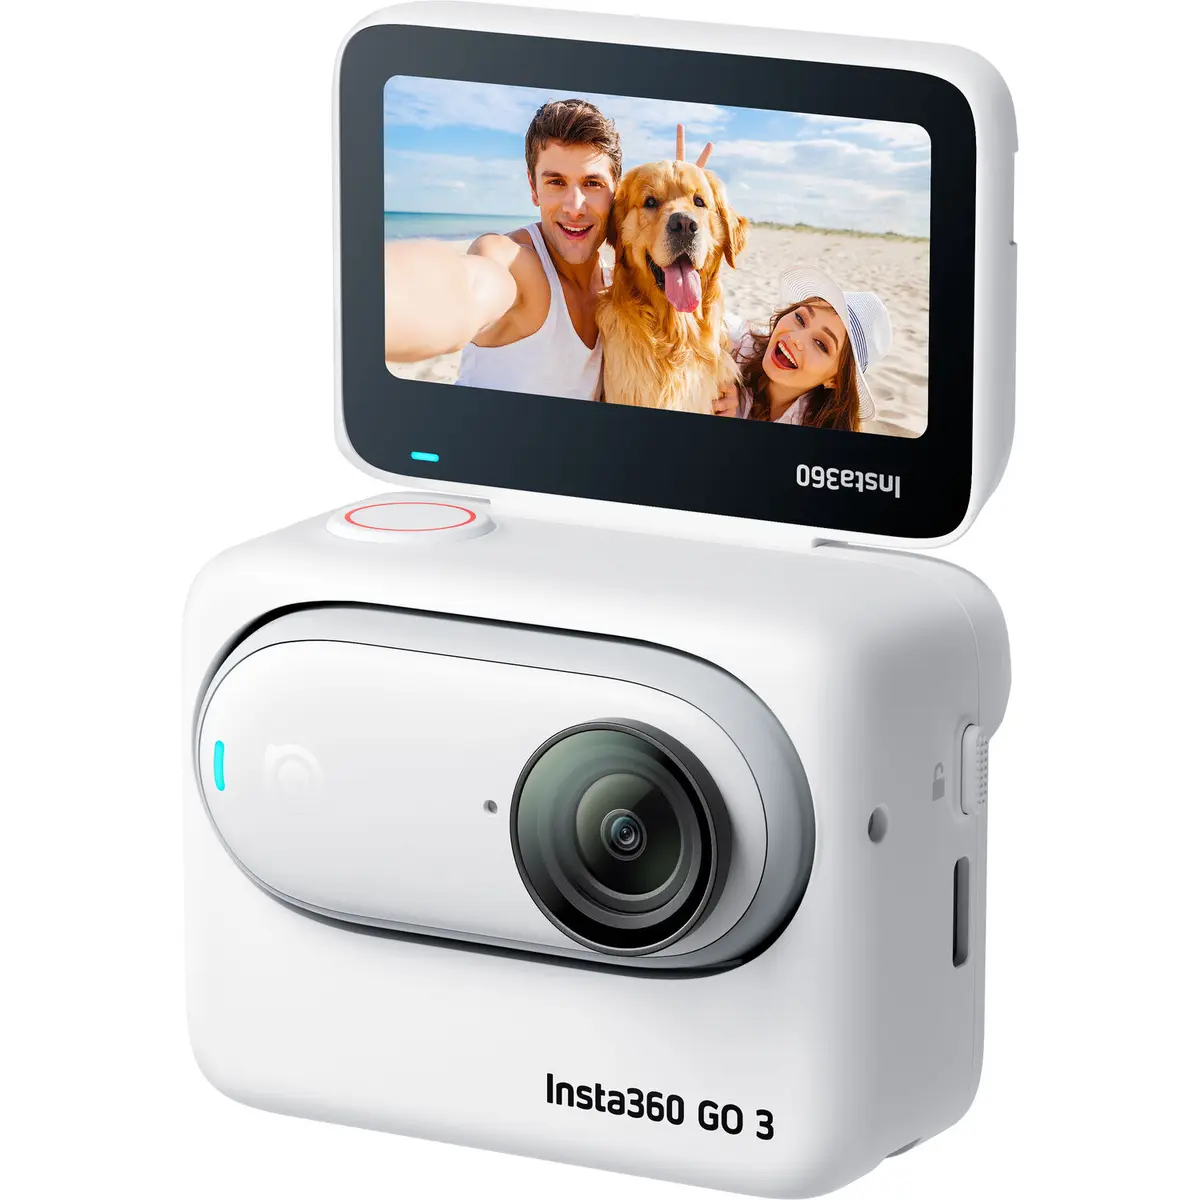 2. Insta360 Go 3 Camera (64GB)